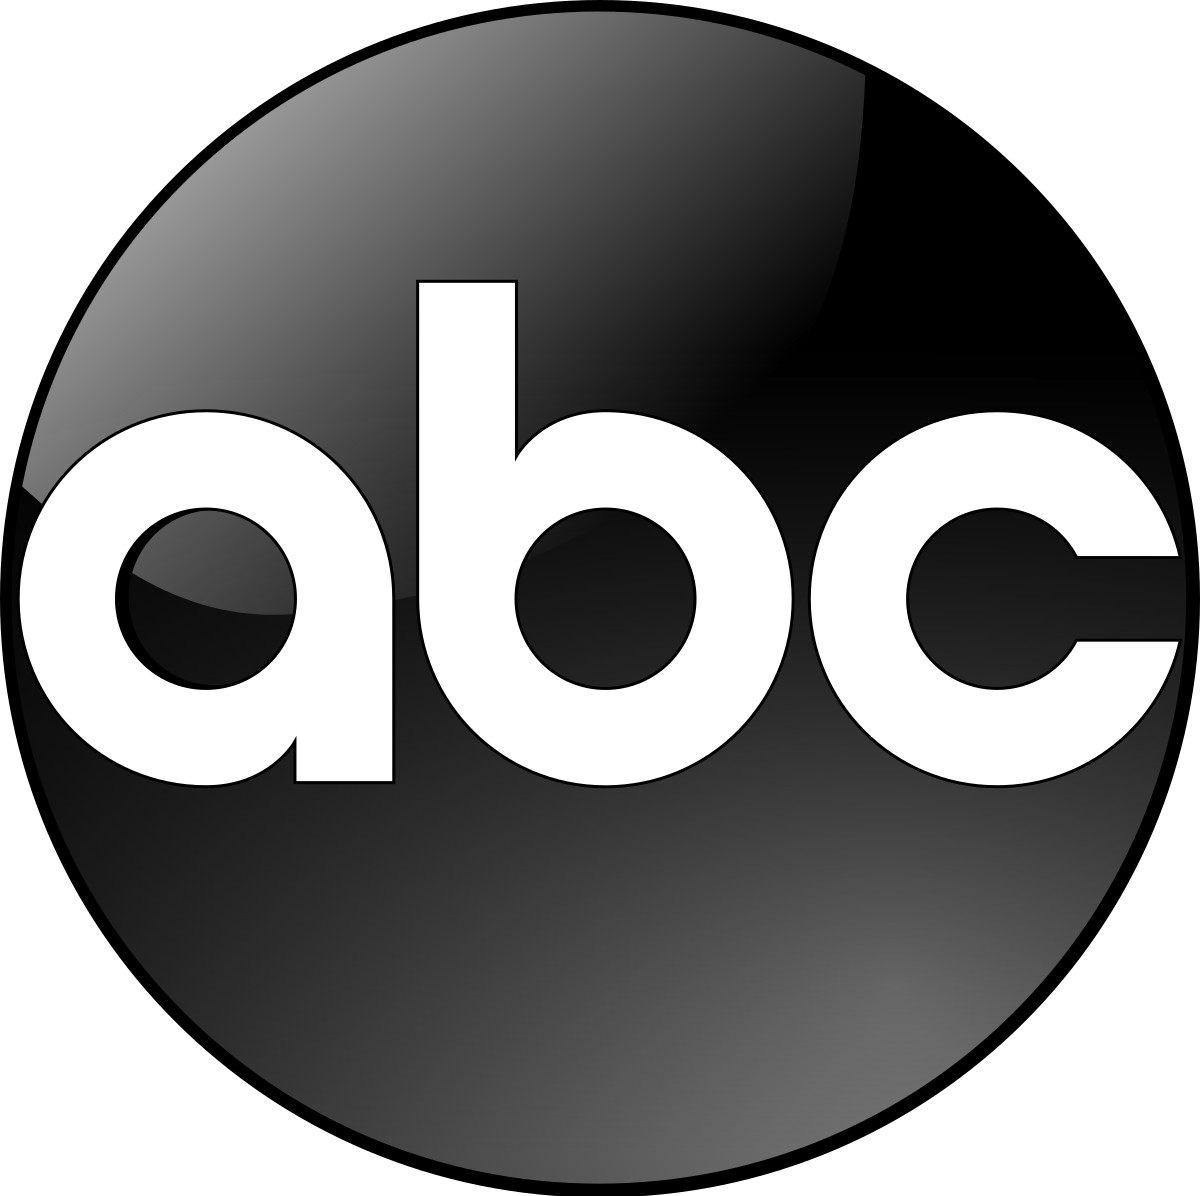 Famous Translucent Logo - American Broadcasting Company